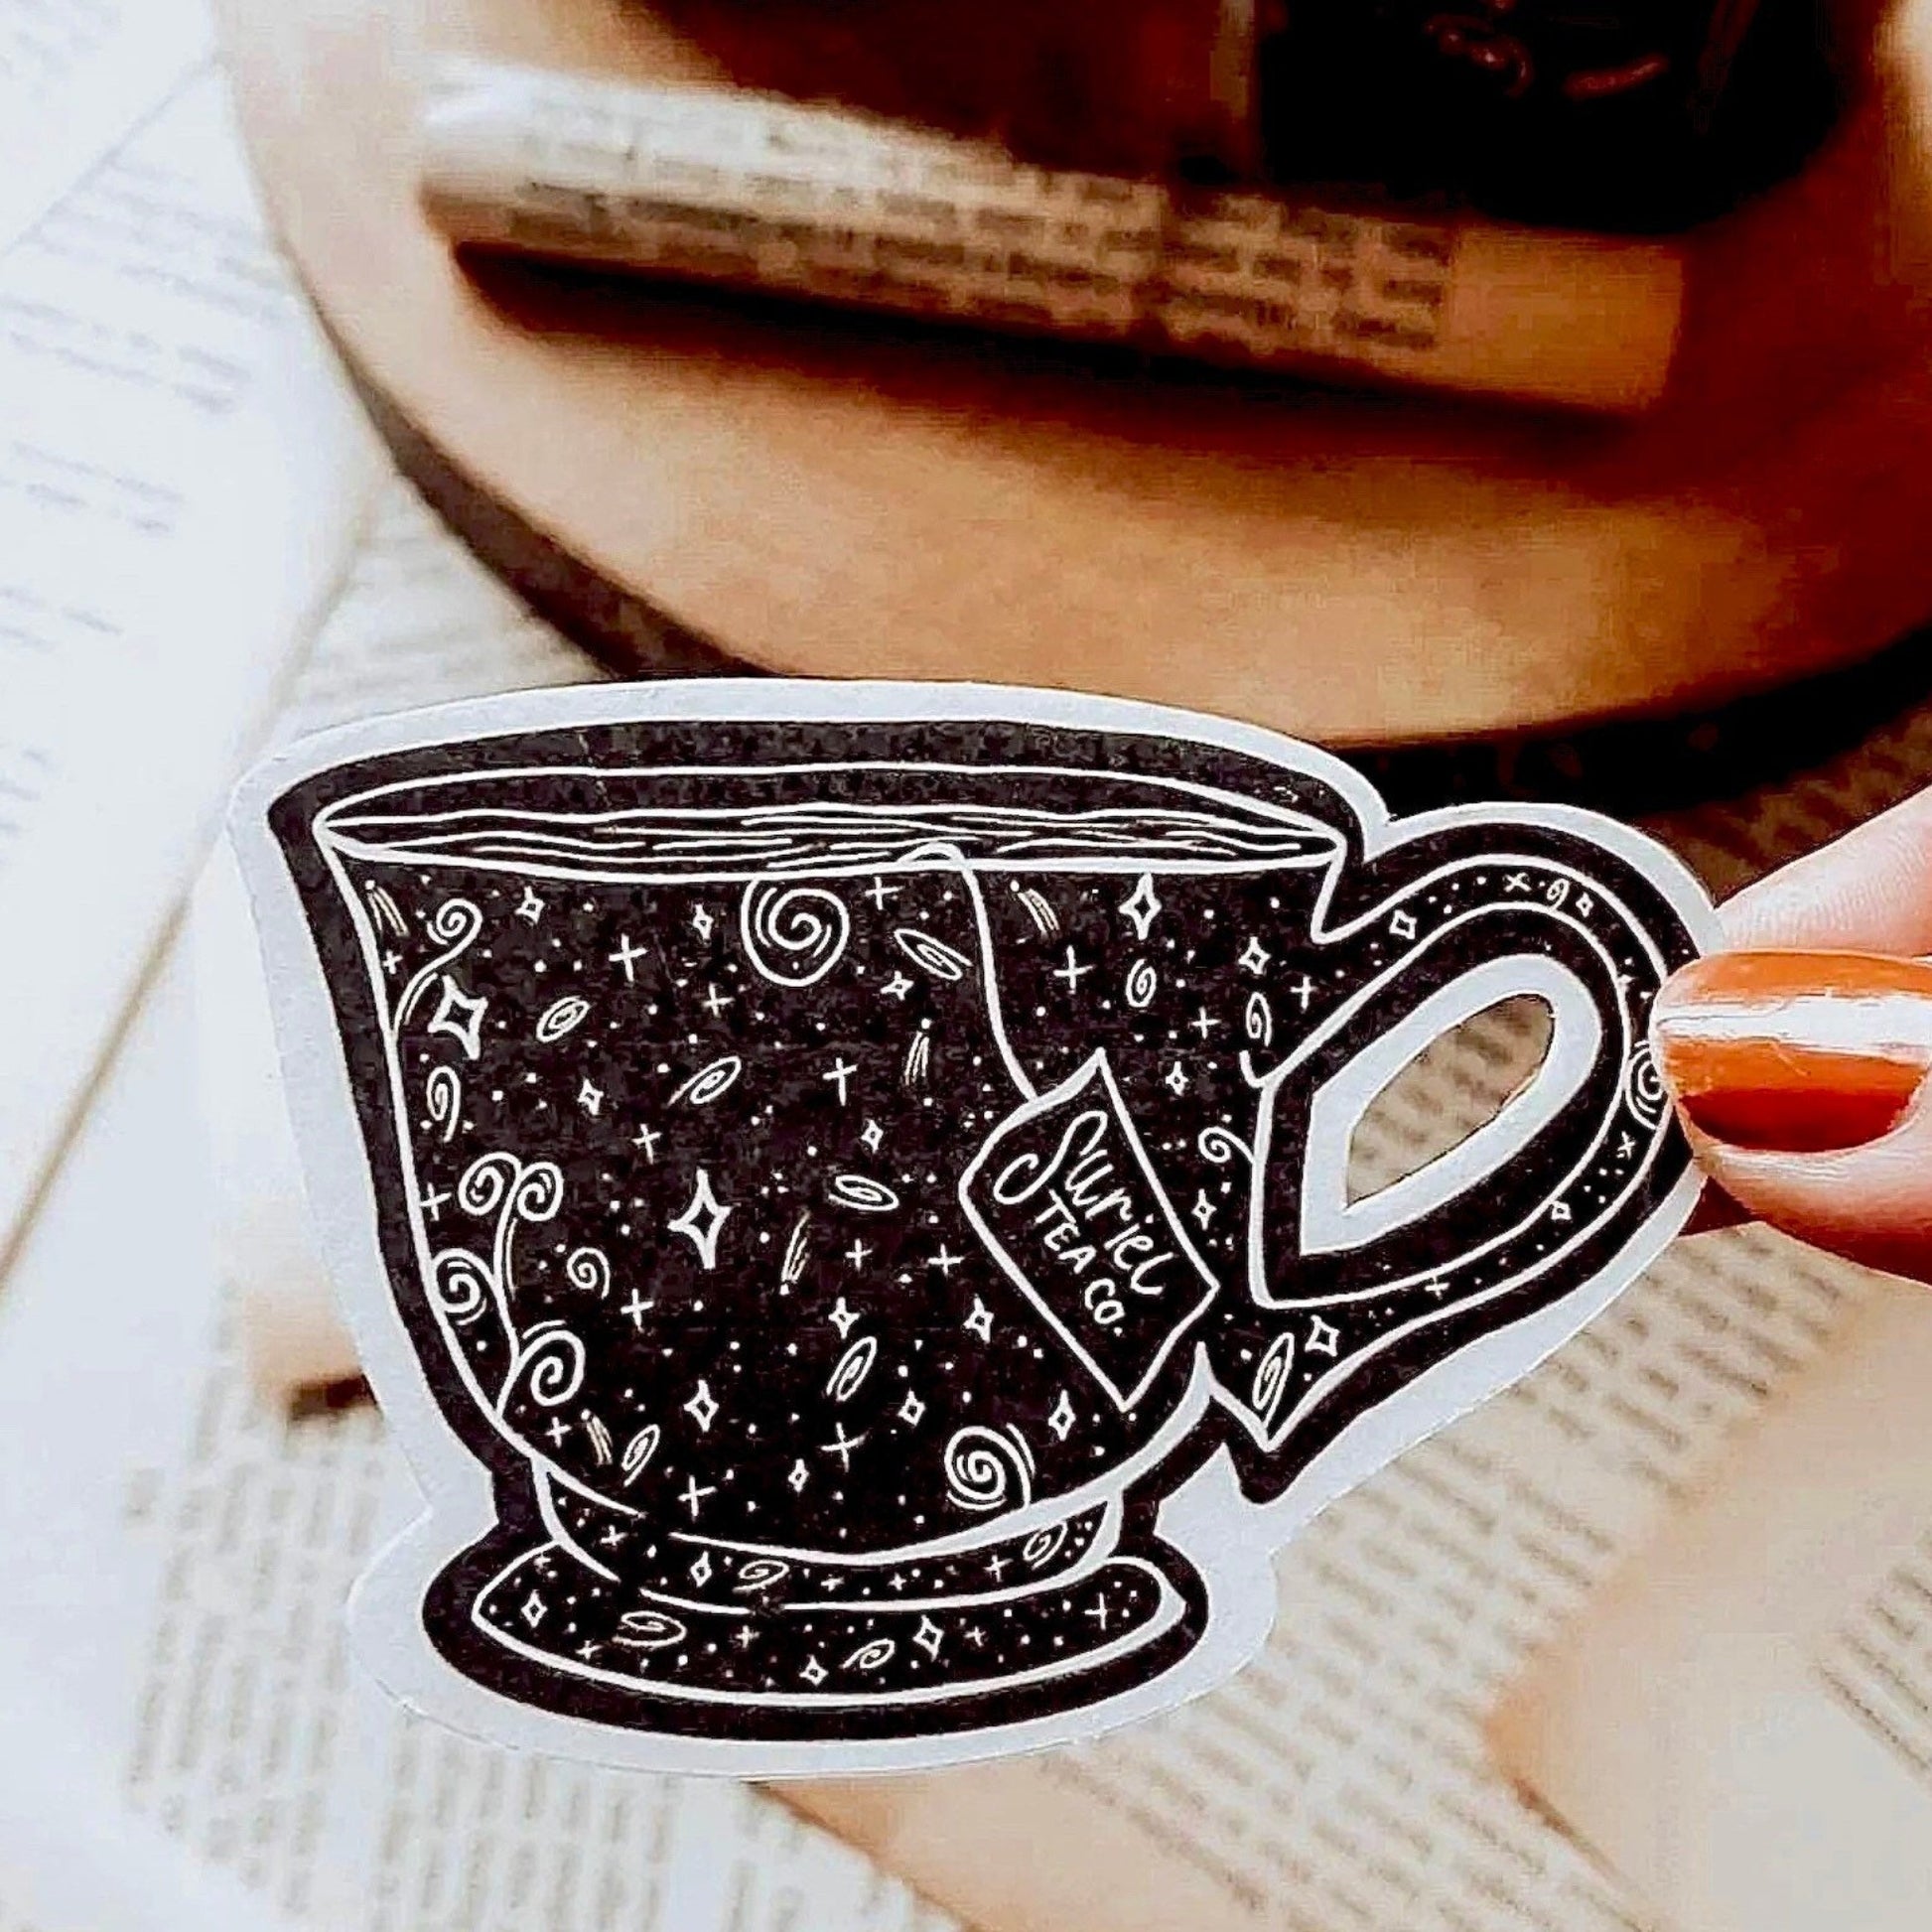 ACOTAR suriel tea co sticker - - officially licensed by Sarah J. Maas –  Romantasy Designs